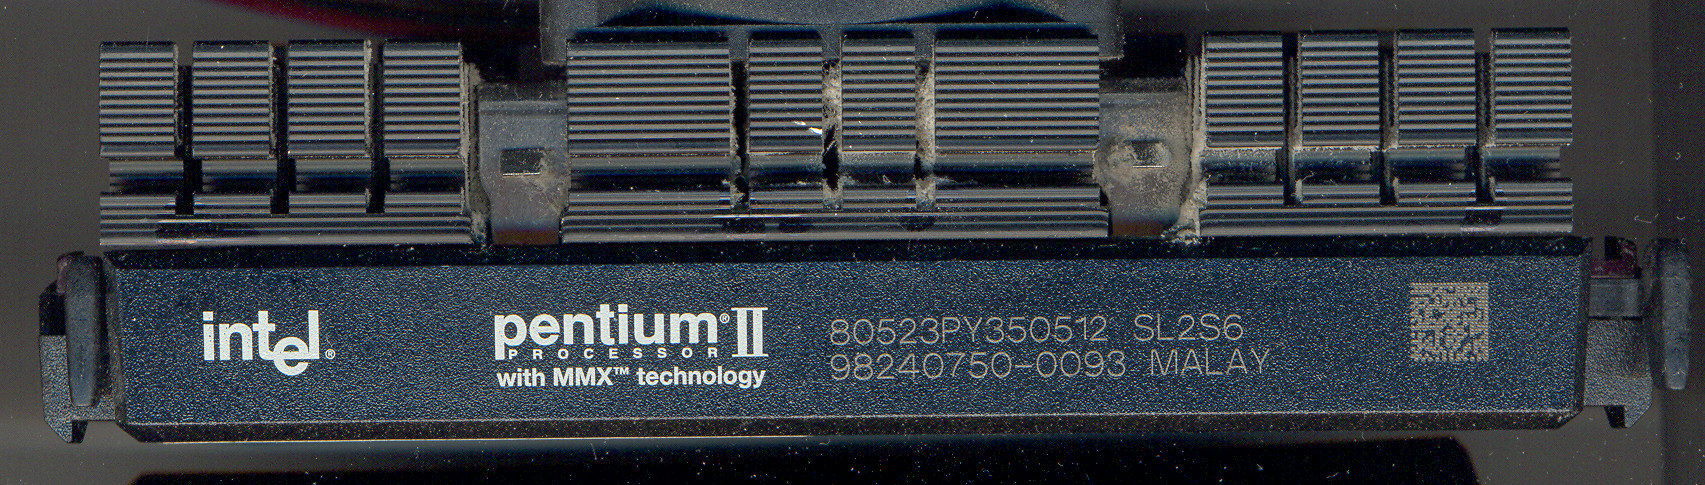 Intel Pentium II 80523PY350512 SL2S6 MALAY